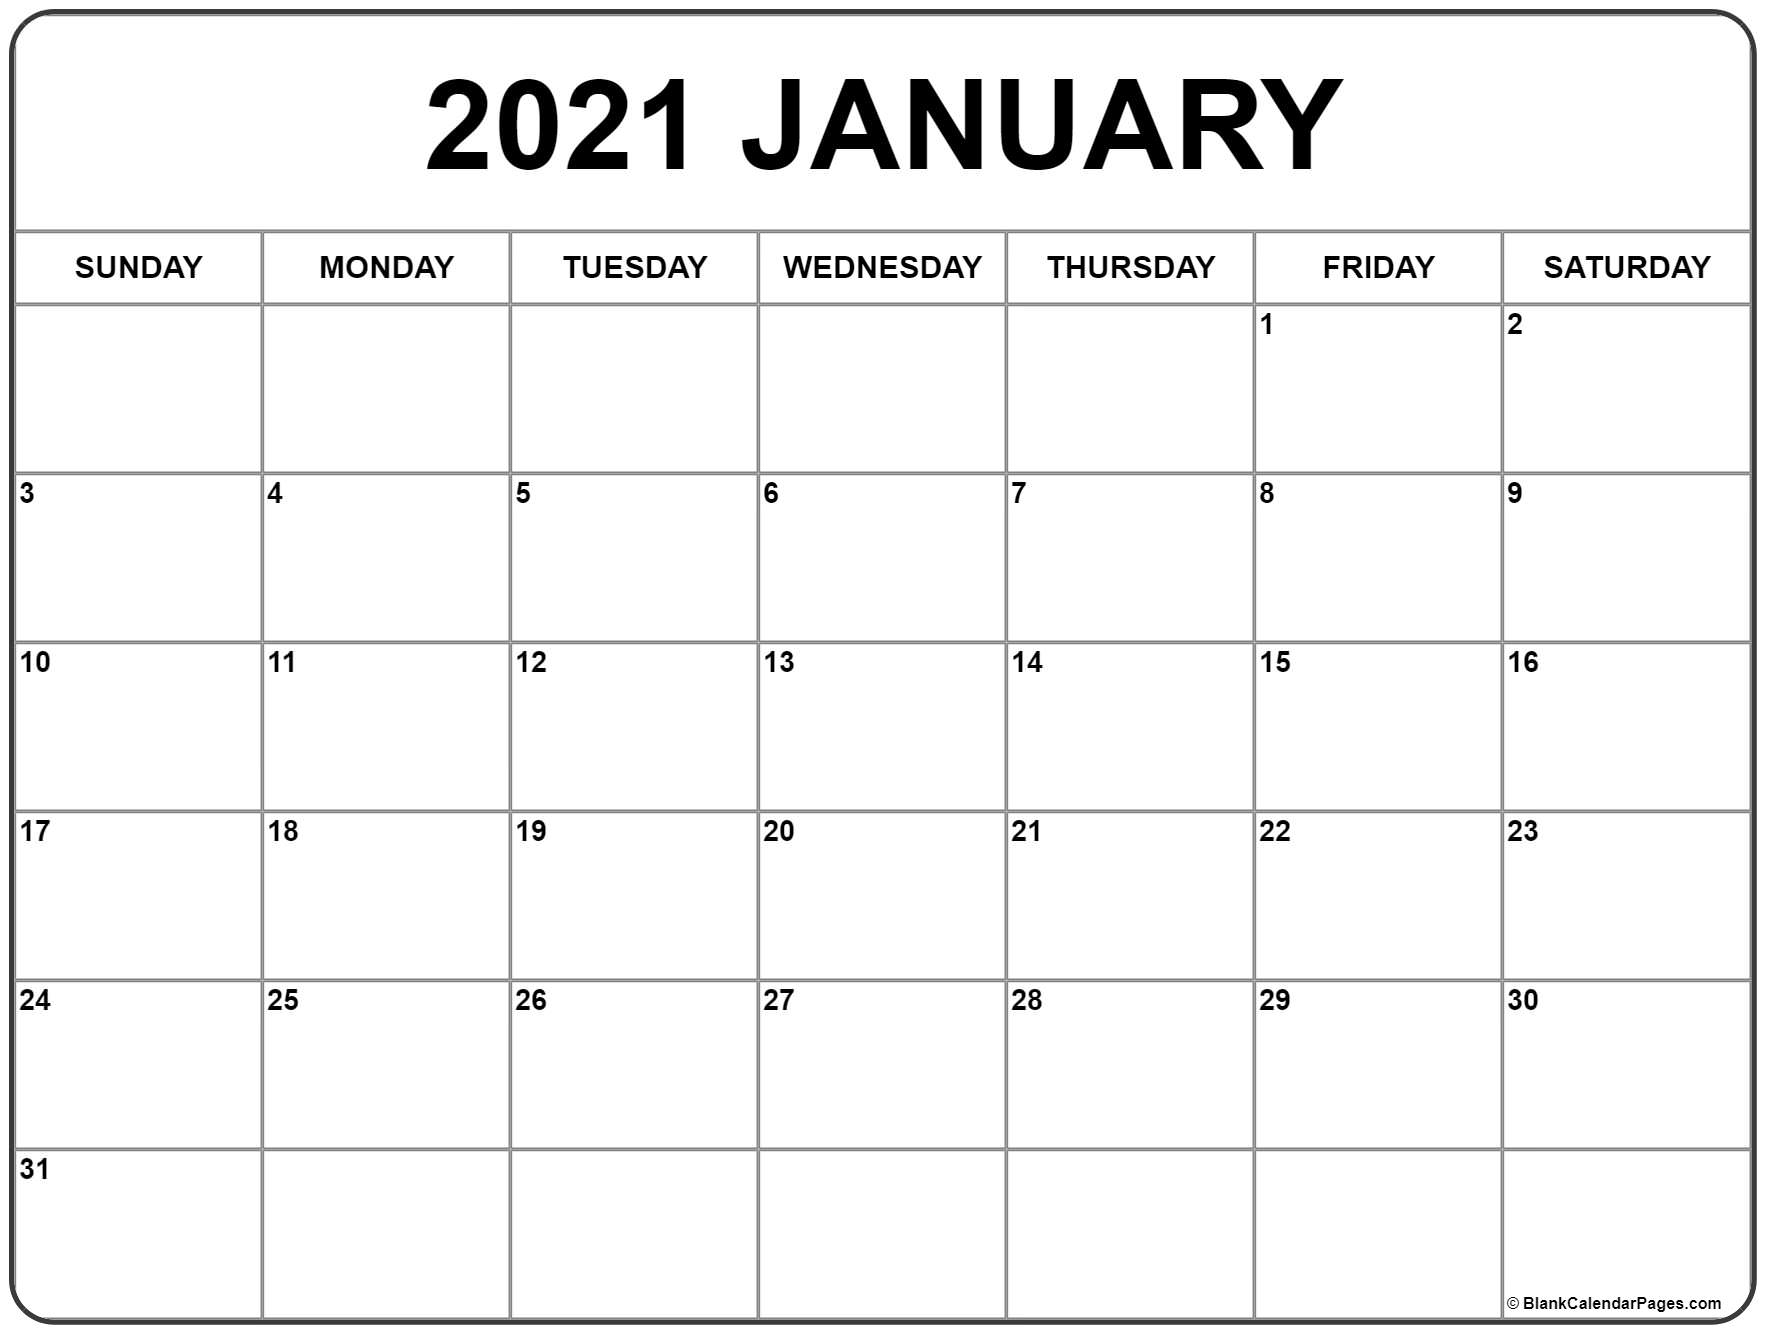 Get 2021 November Calendar Free Image